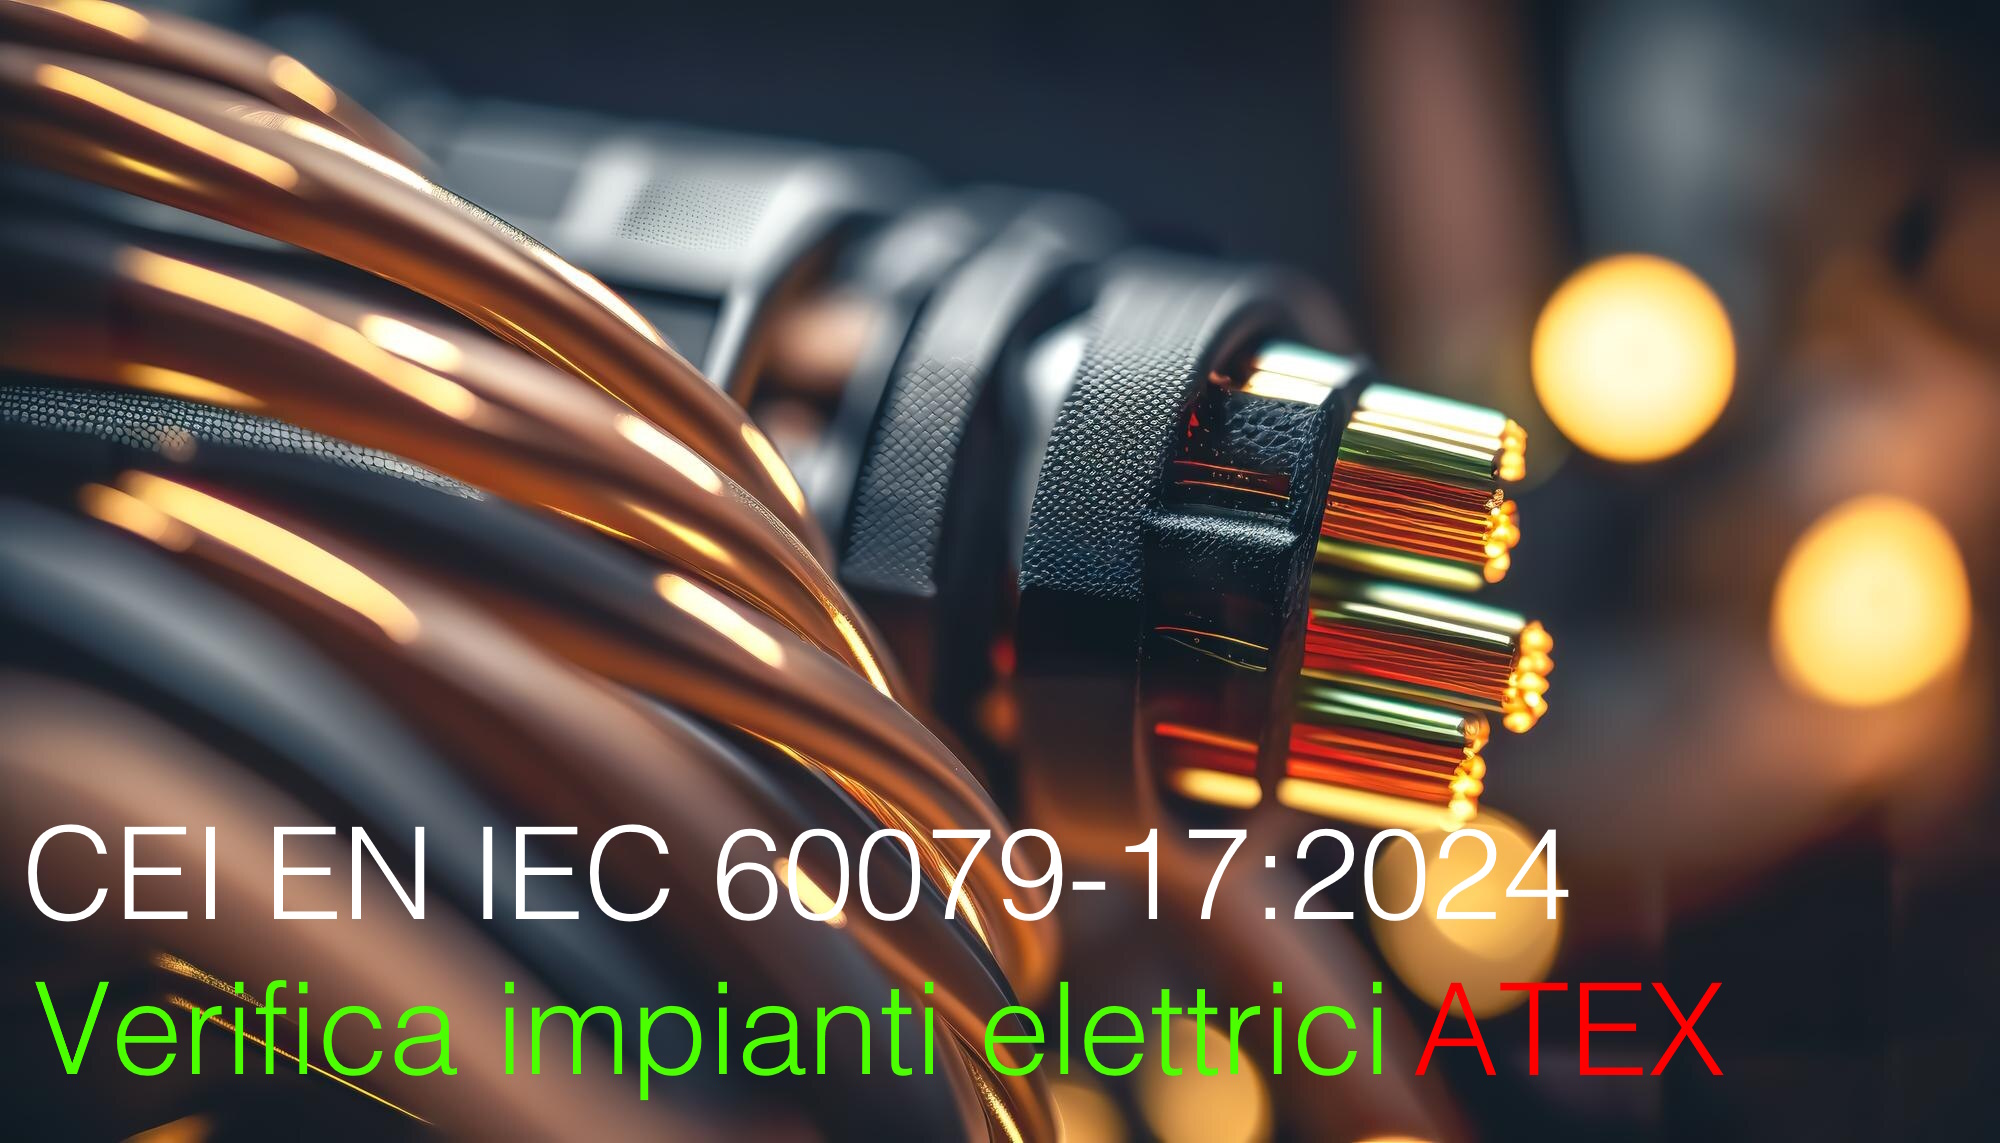 EN IEC 60079 17 Verifica impianti elettrici ATEX